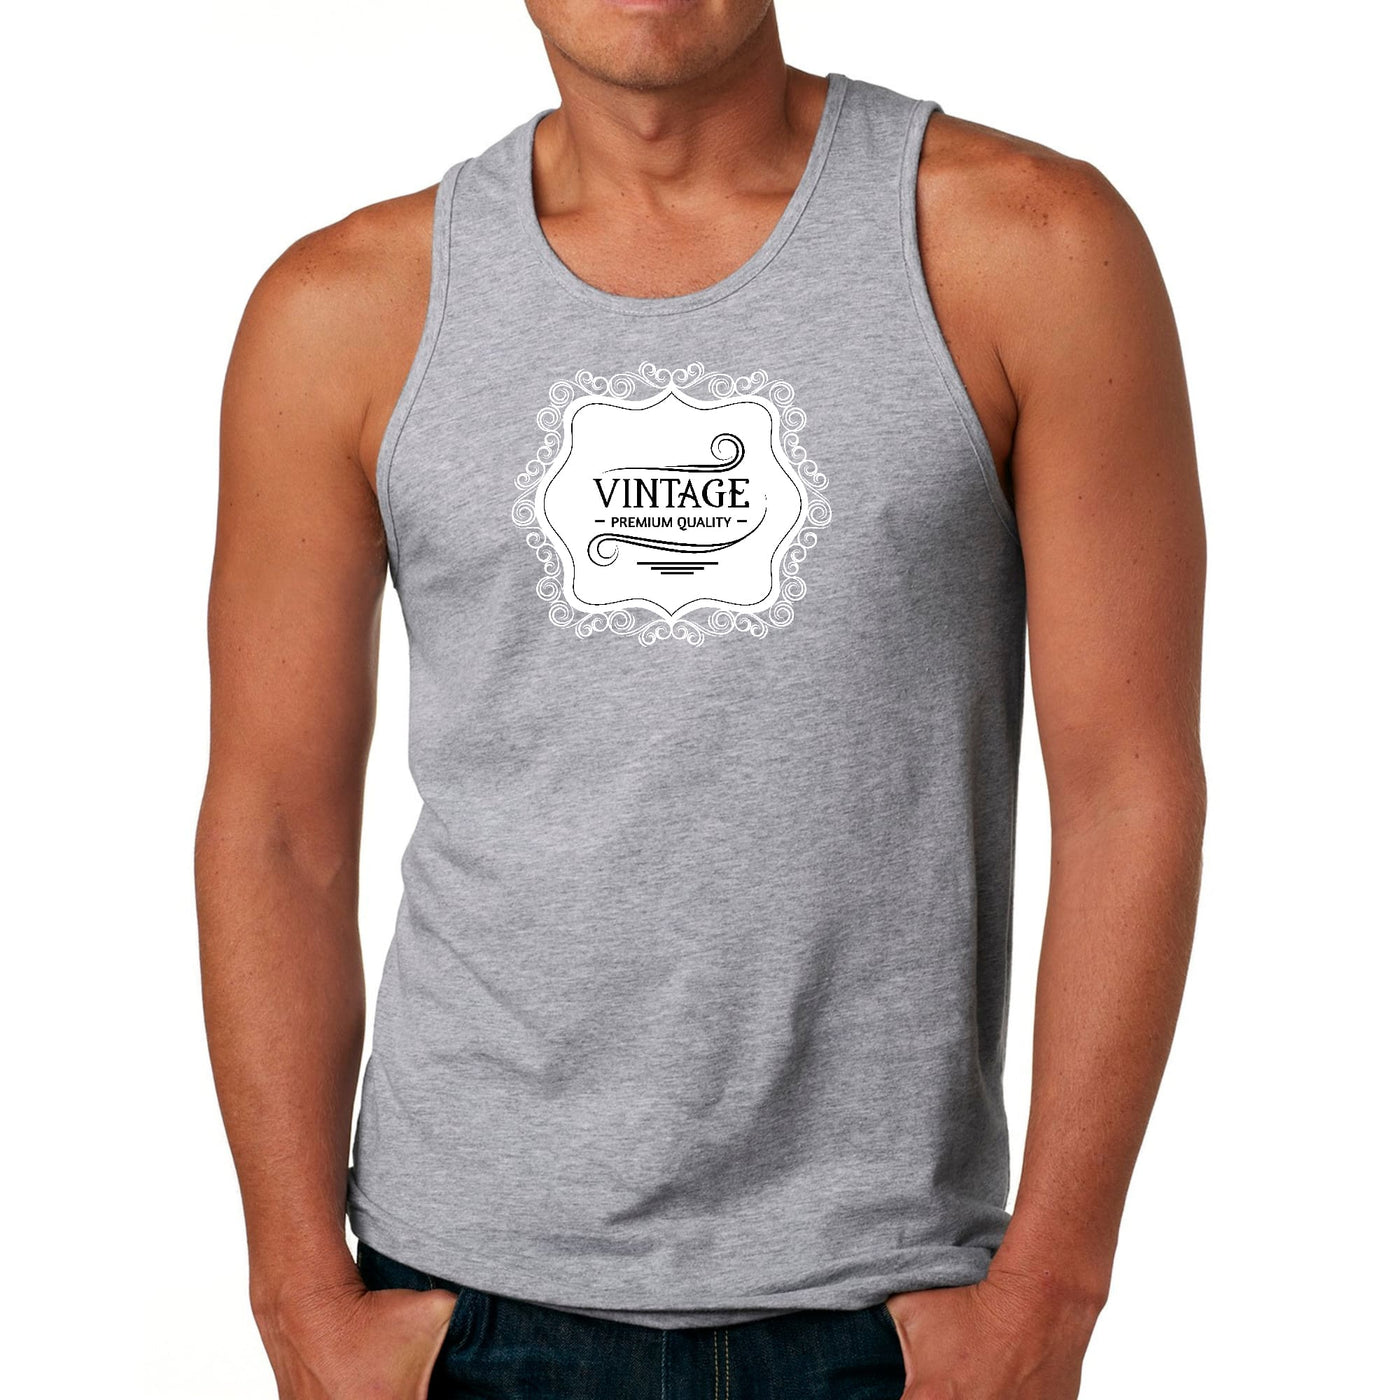 Mens Fitness Tank Top Graphic T-shirt Vintage Premium Quality White - Mens